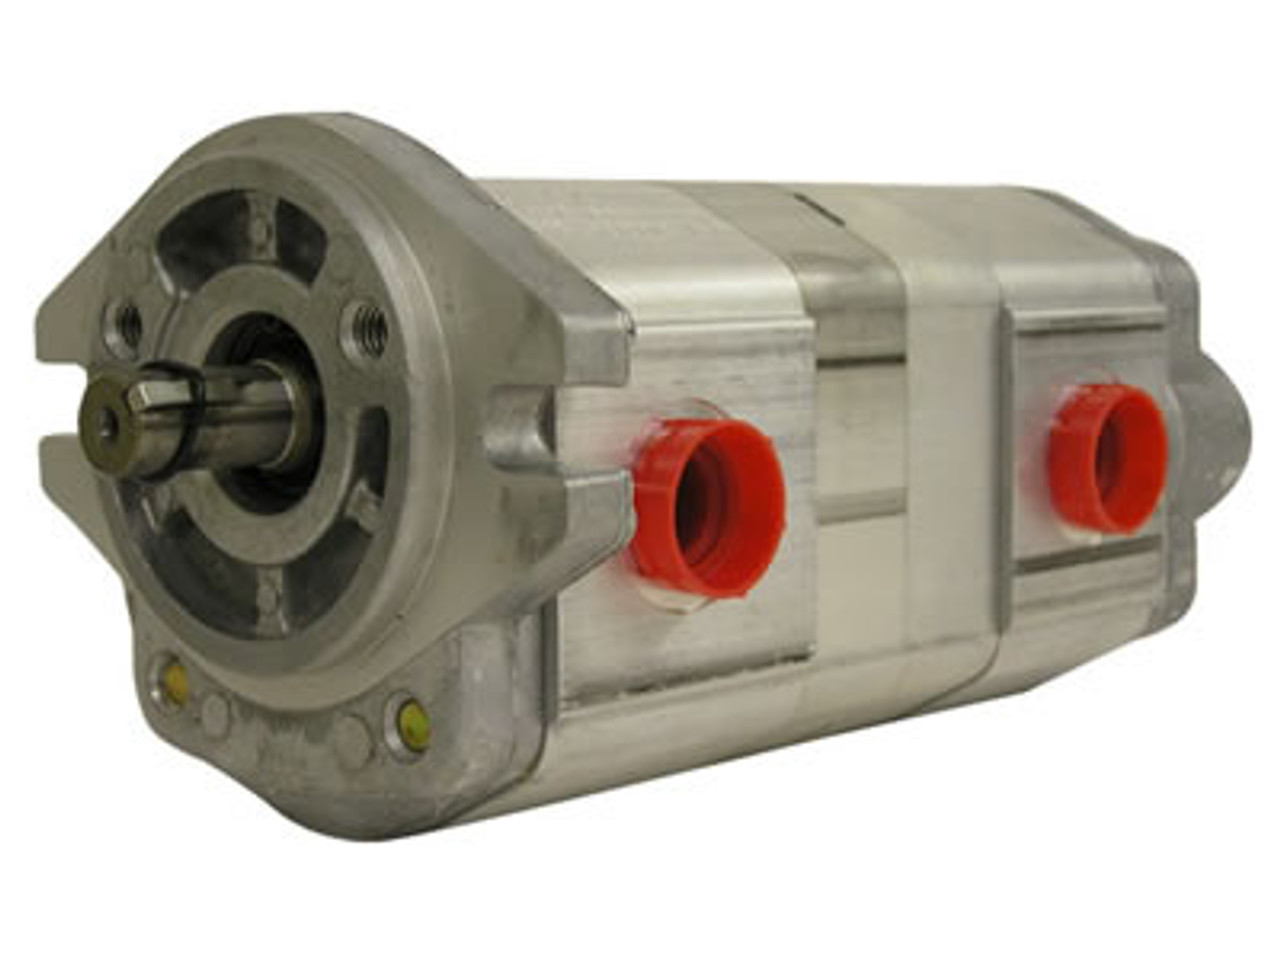 2DG1BU1609R Honor Pumps USA Tandem hydraulic gear pump 7.42 GPM/4.39 GPM @ 1800 RPM  Honor Pumps USA